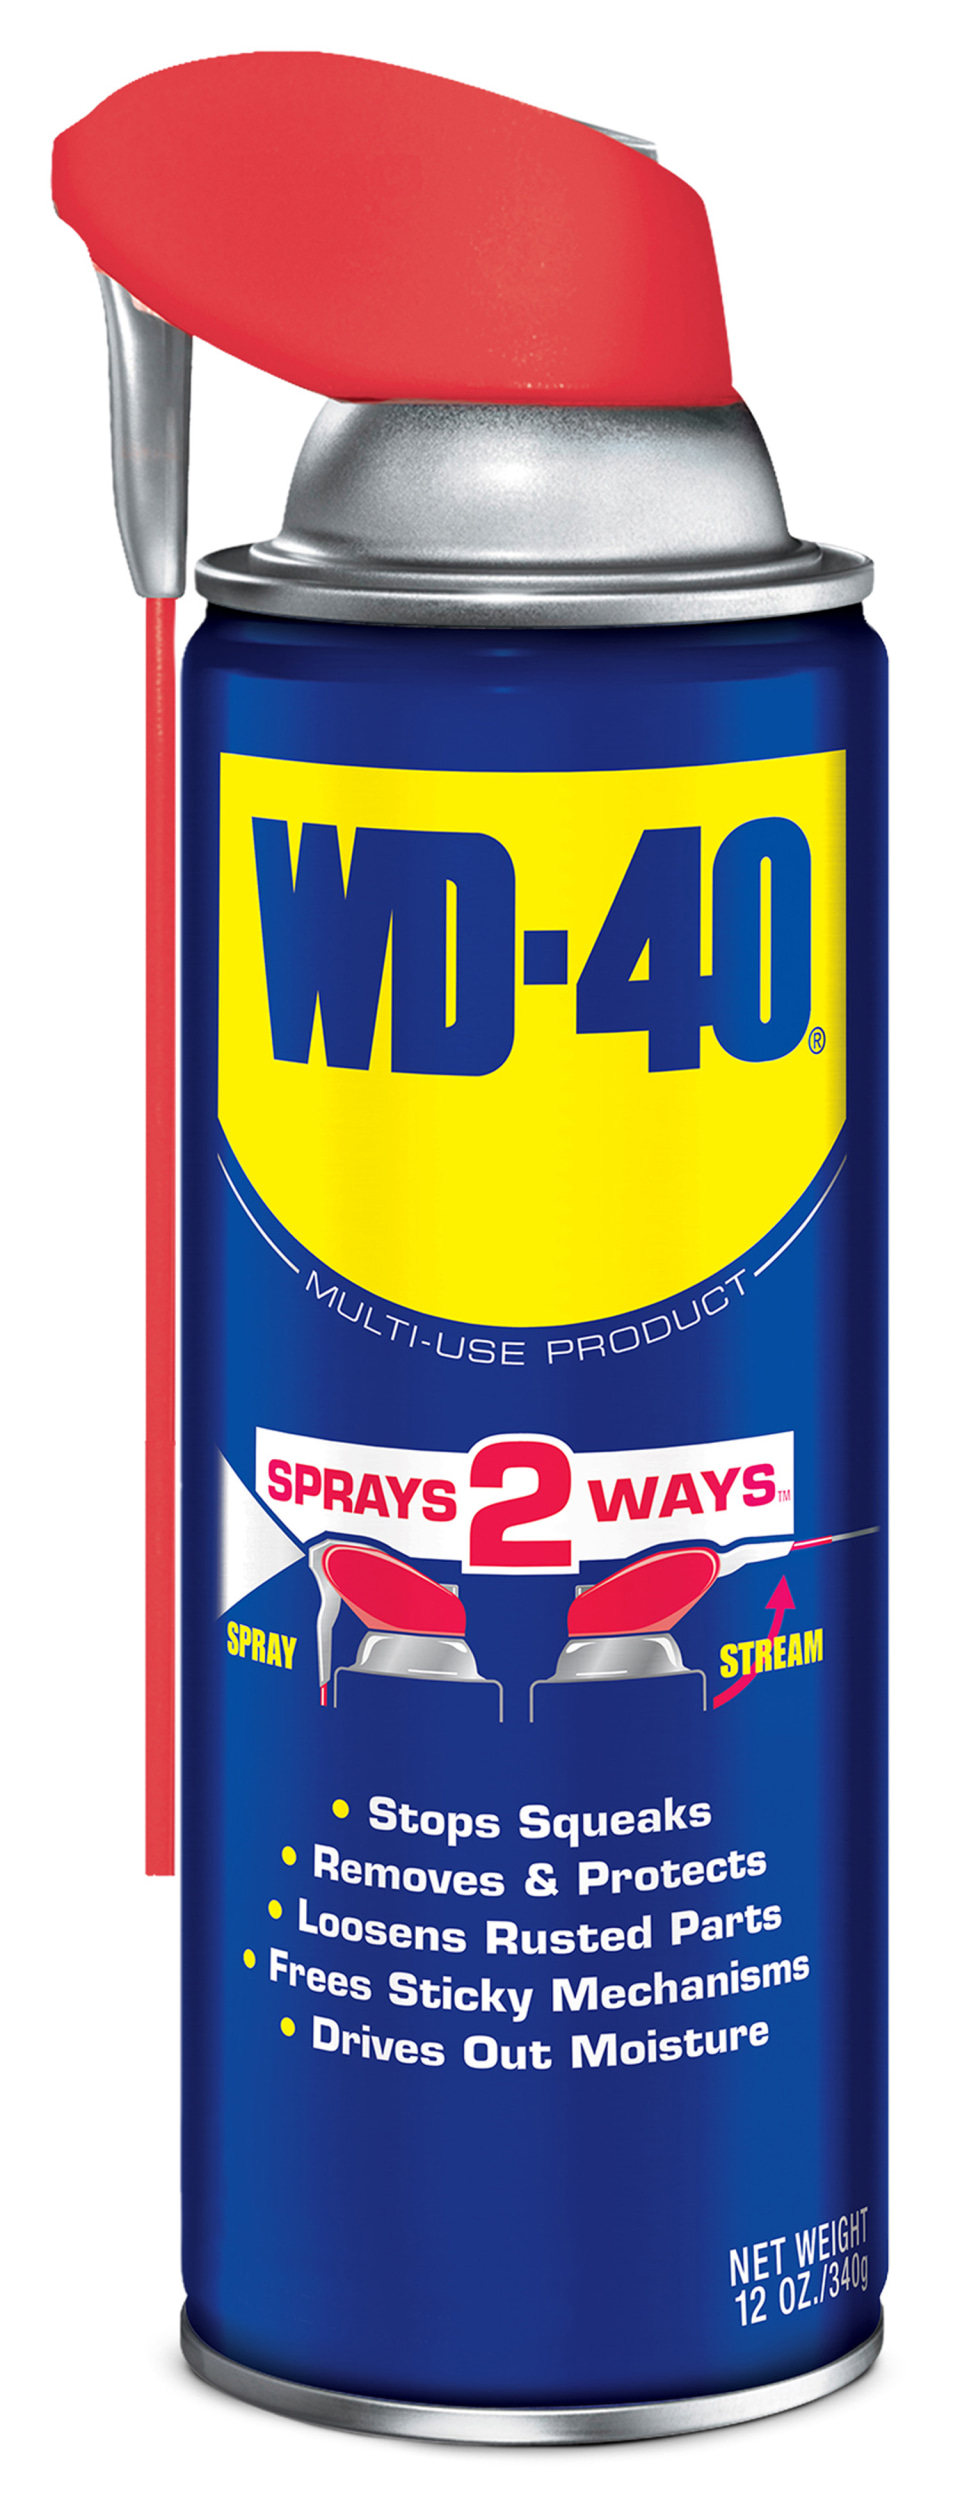 Original WD-40 Formula, Multi-Use Product With Smart Straw Sprays 2 Ways, Multi-Purpose Lubricant Spray, 12 oz - image 2 of 10